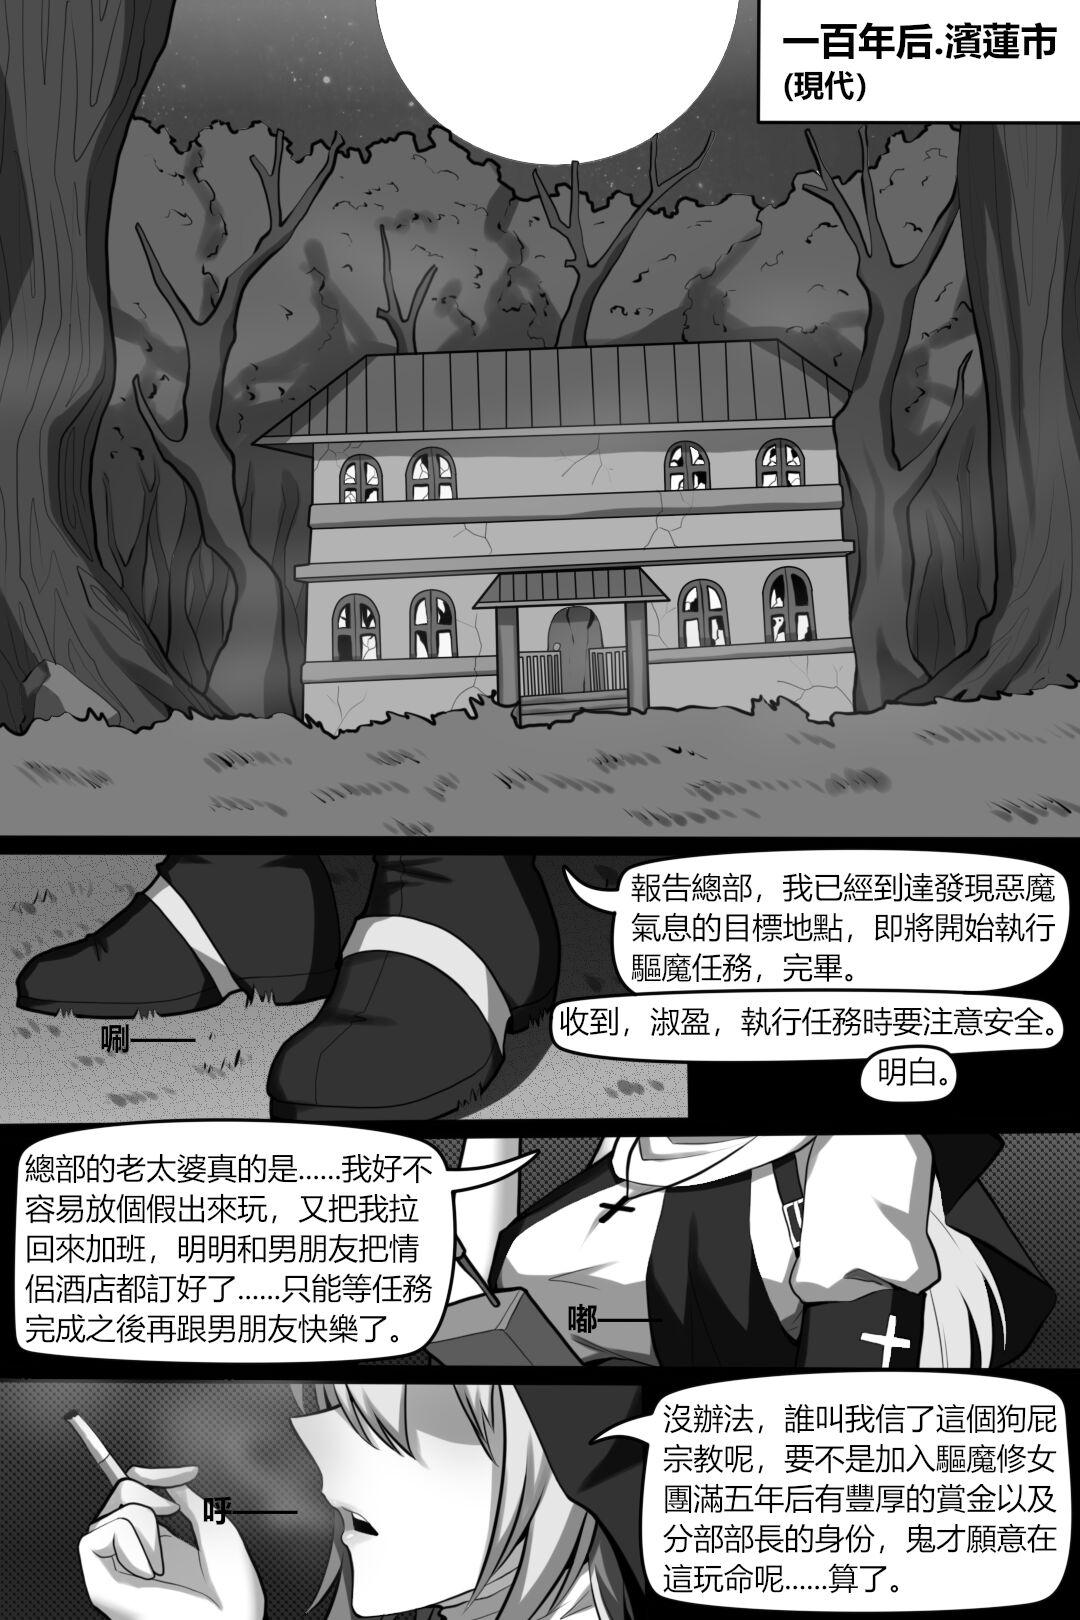 Fucking Bin Lian City Stories Ch2: Exorcist Nun. - Original Chibola - Picture 2